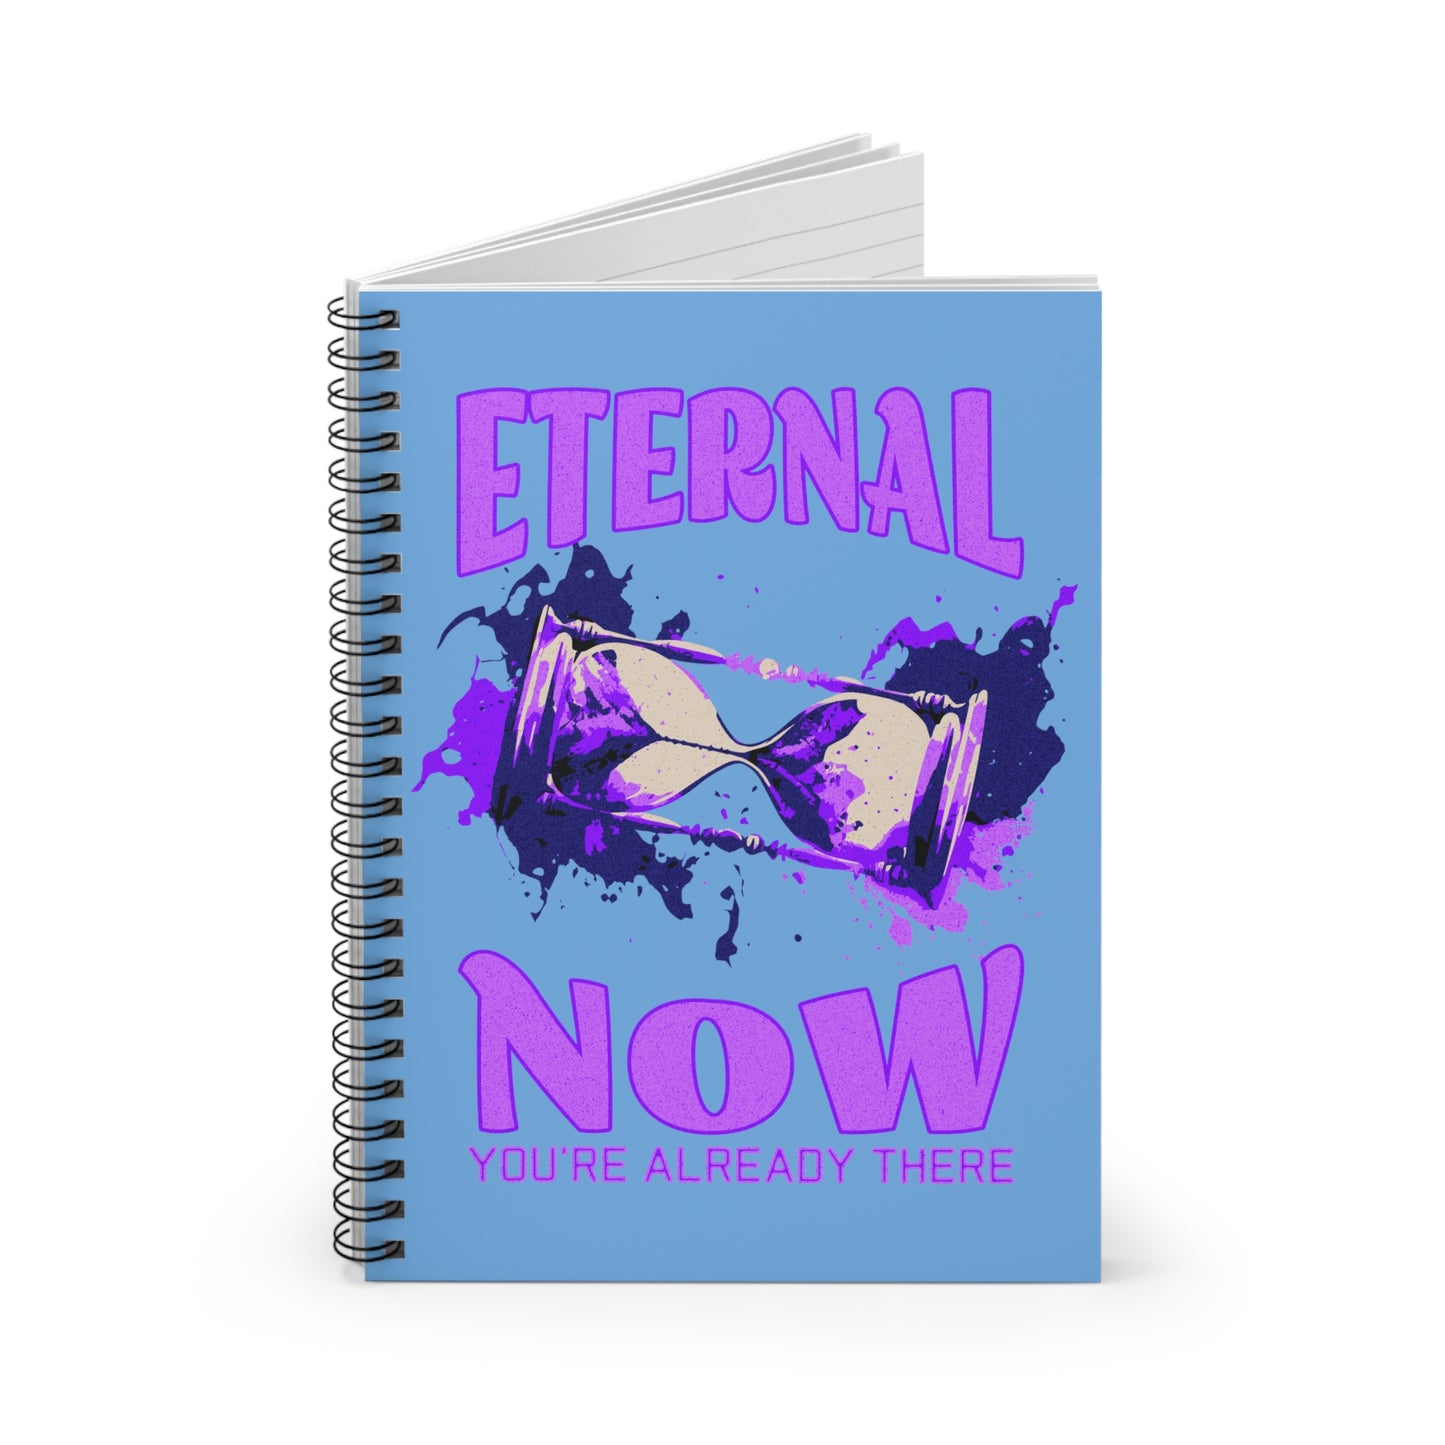 Eternal Now | Spiral Notebook - Ruled Line